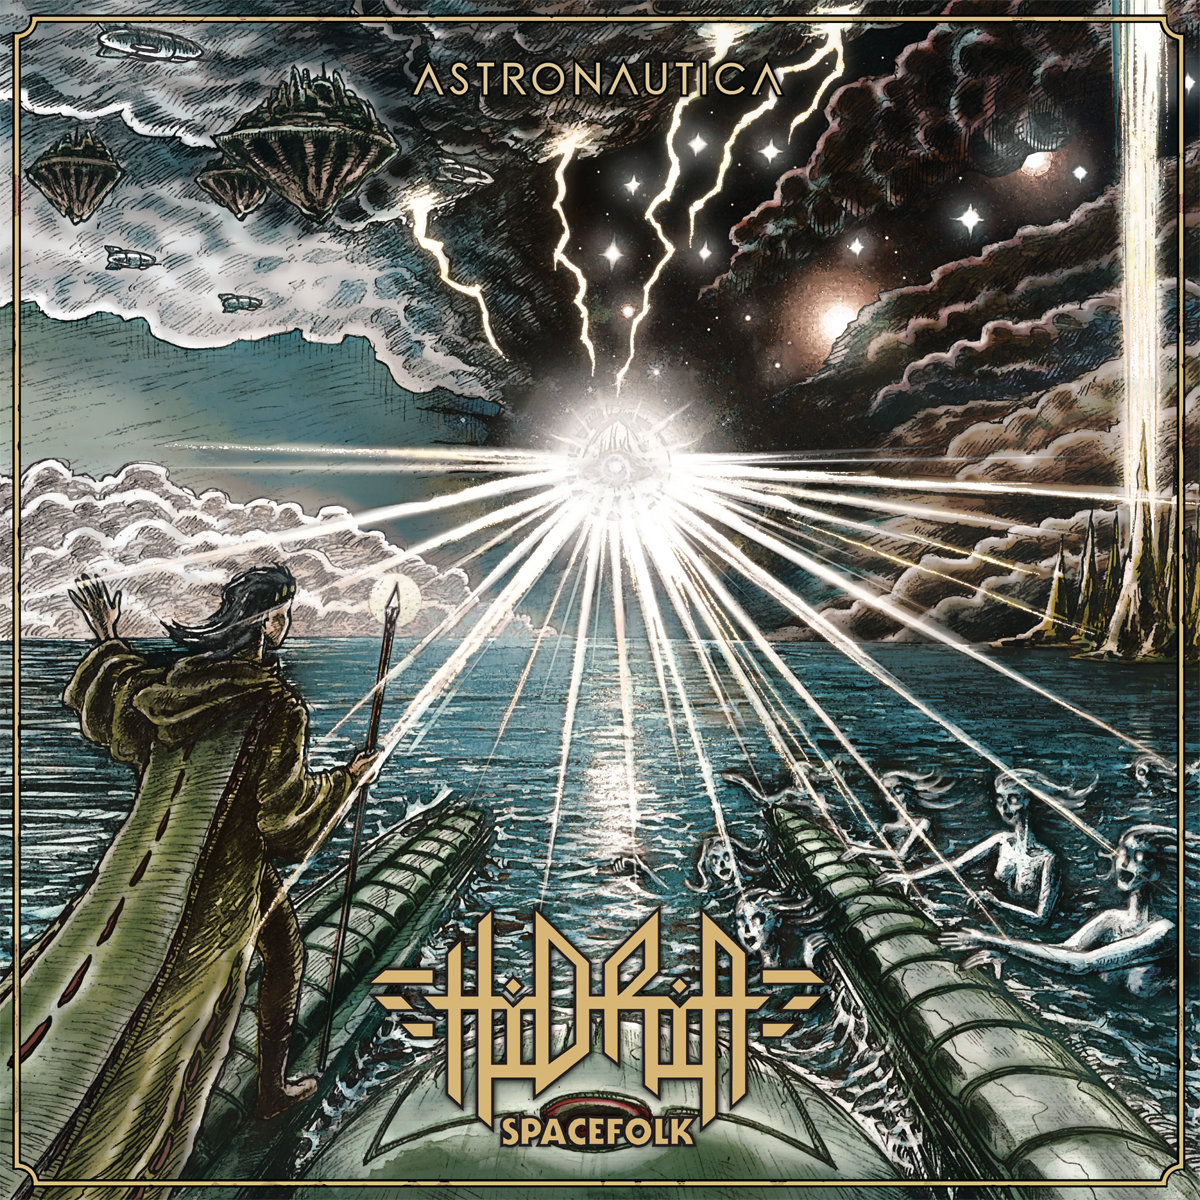 Hidria Spacefolk - Badding @ 'Astronautica' album (alternative, astrobeat)